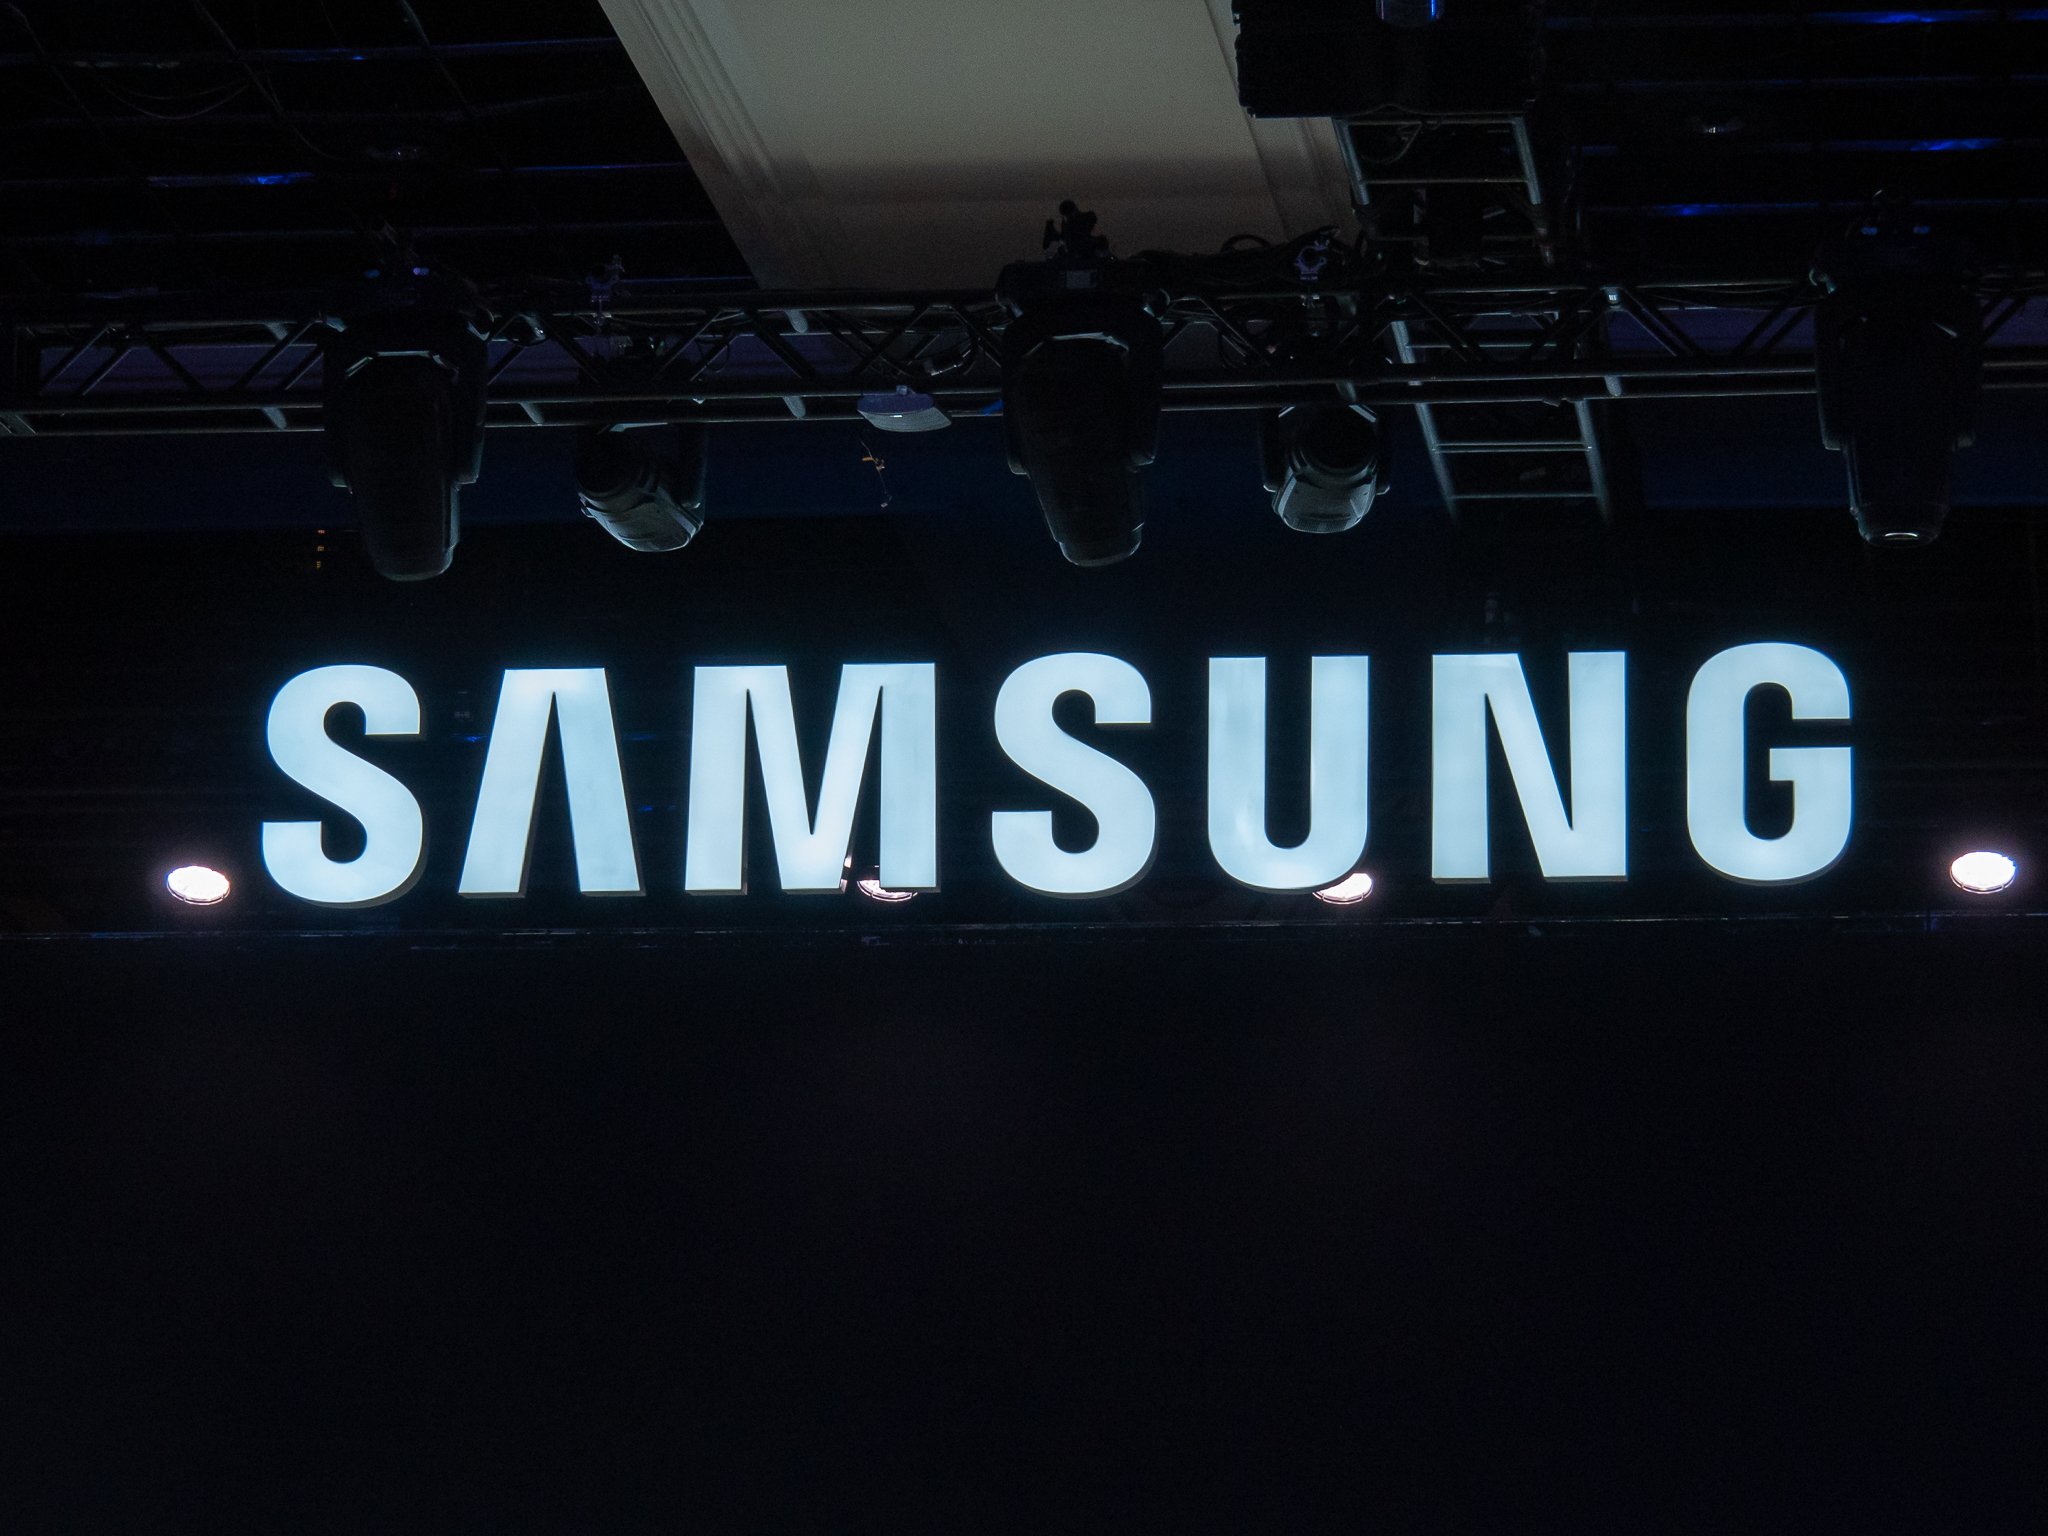 Samsung logo at CES 2019